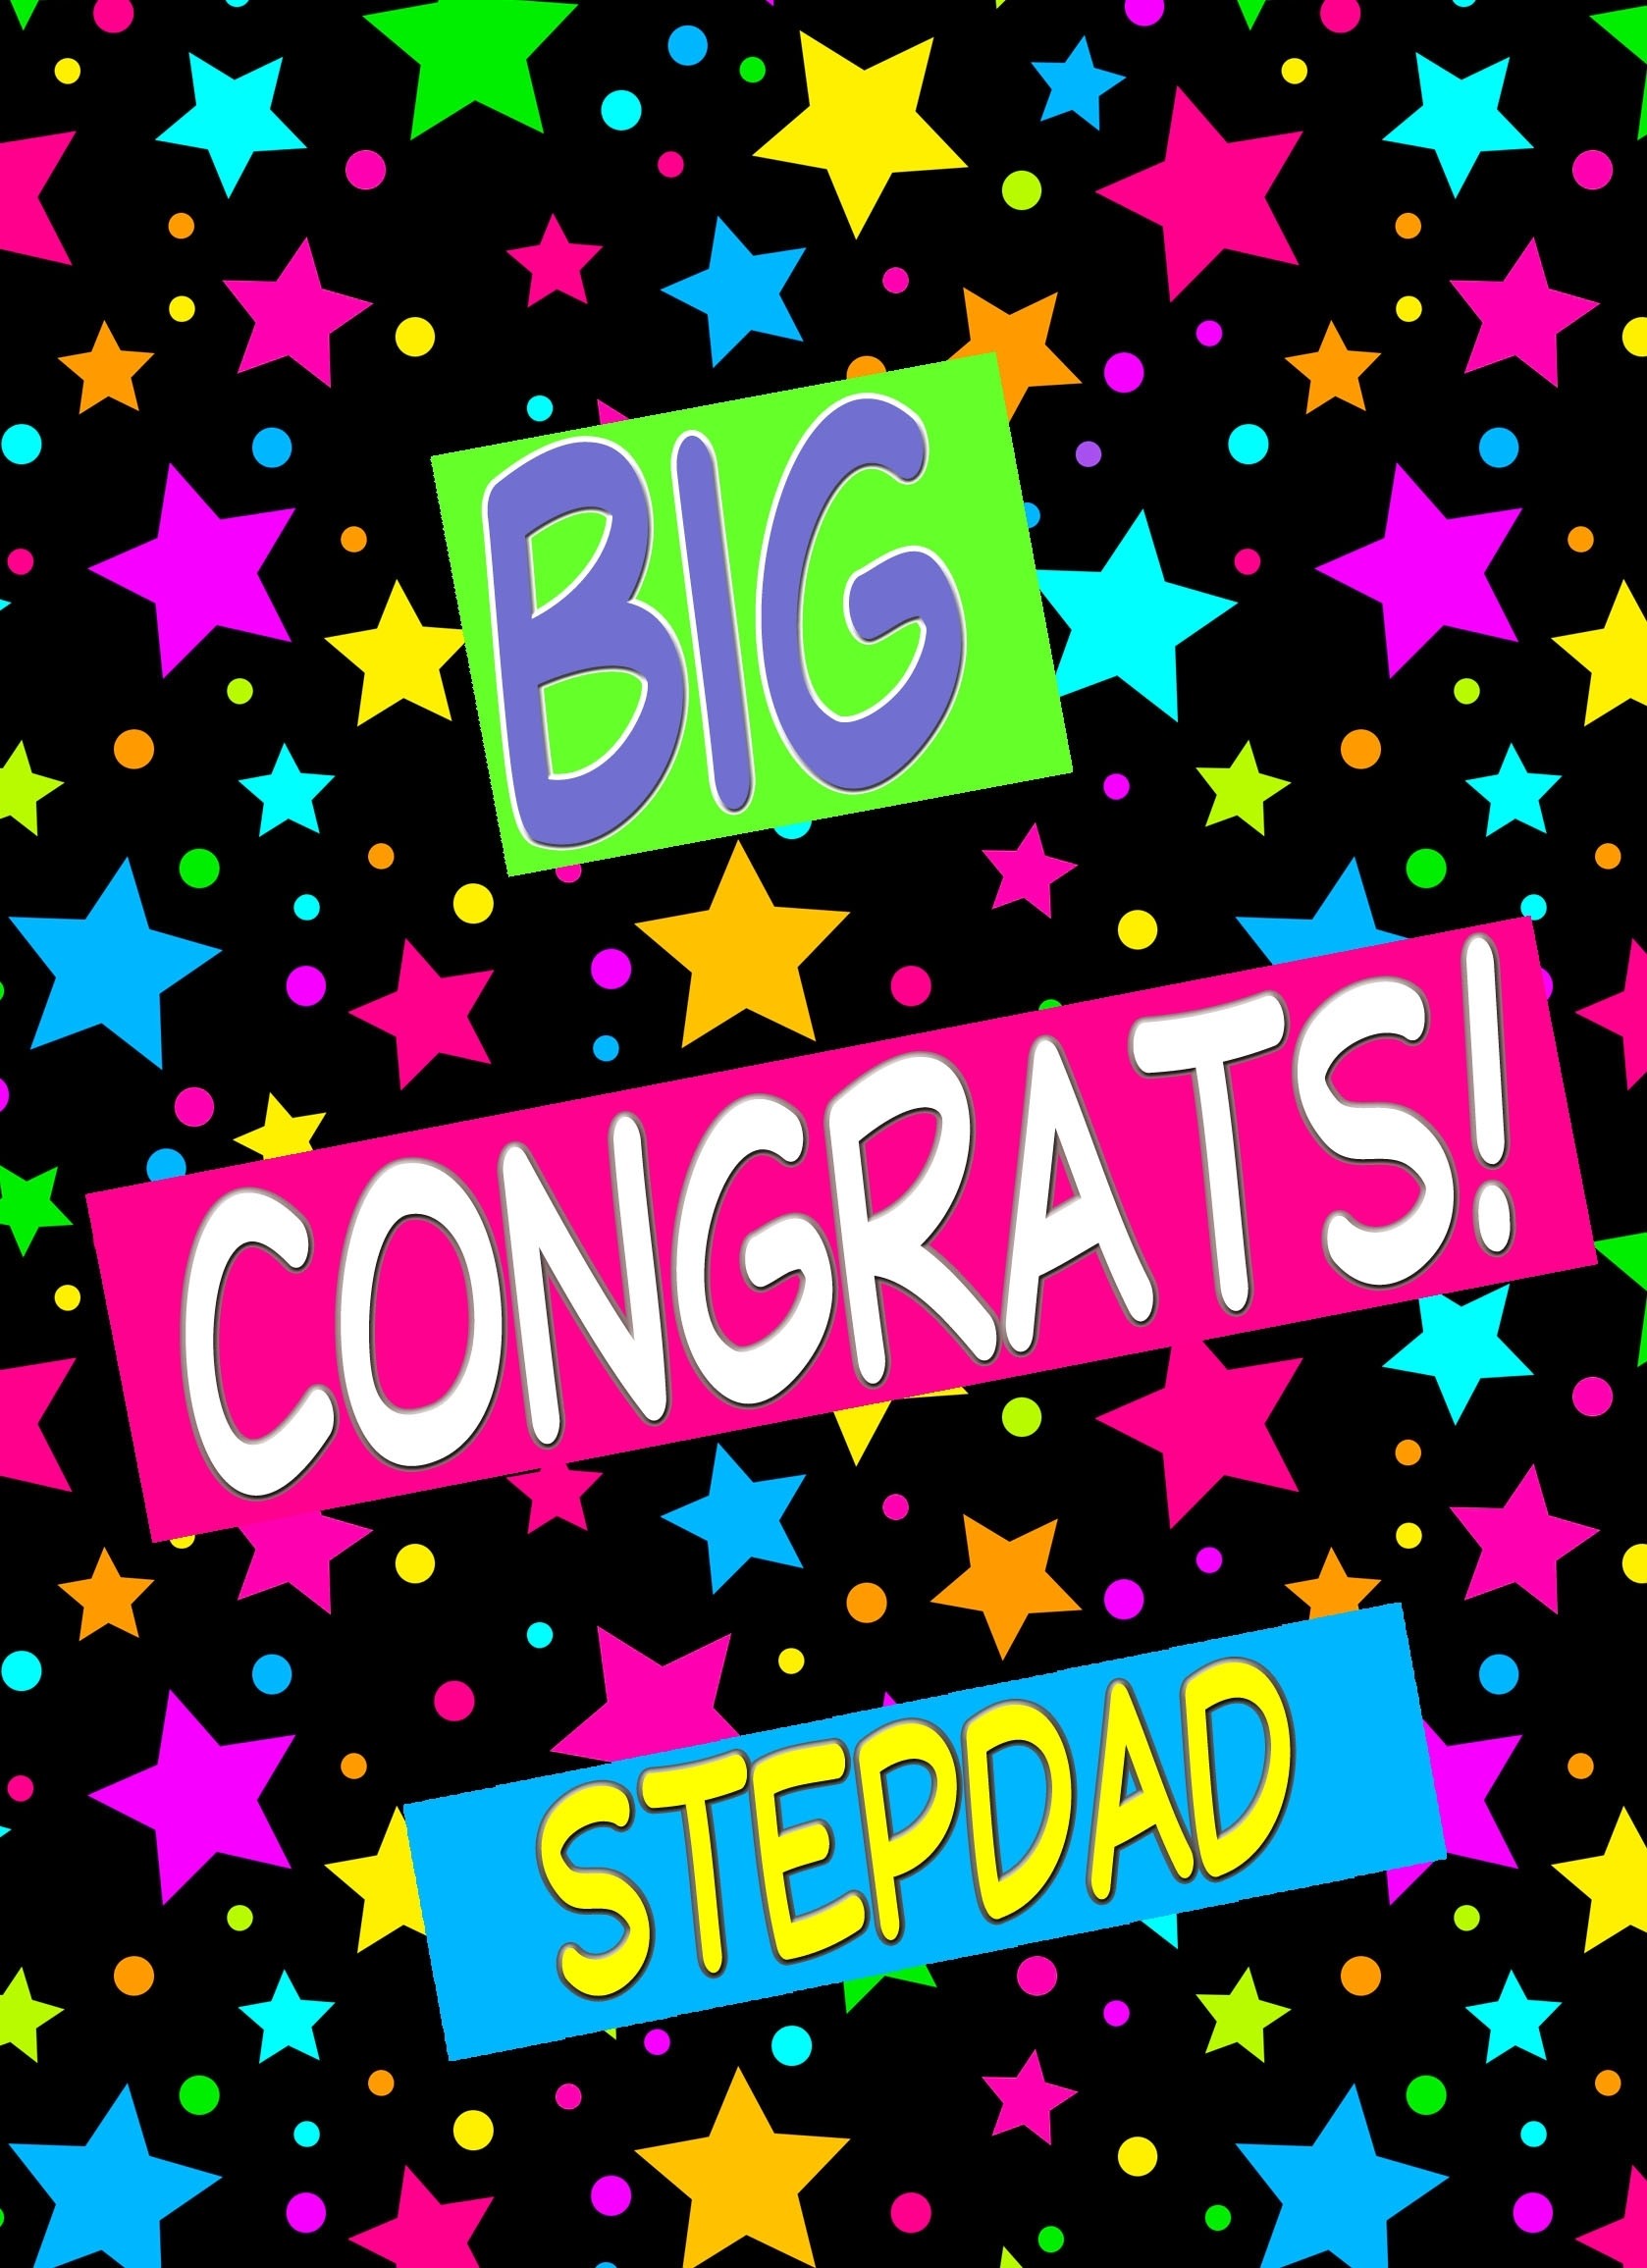 Congratulations Card For Stepdad (Stars)